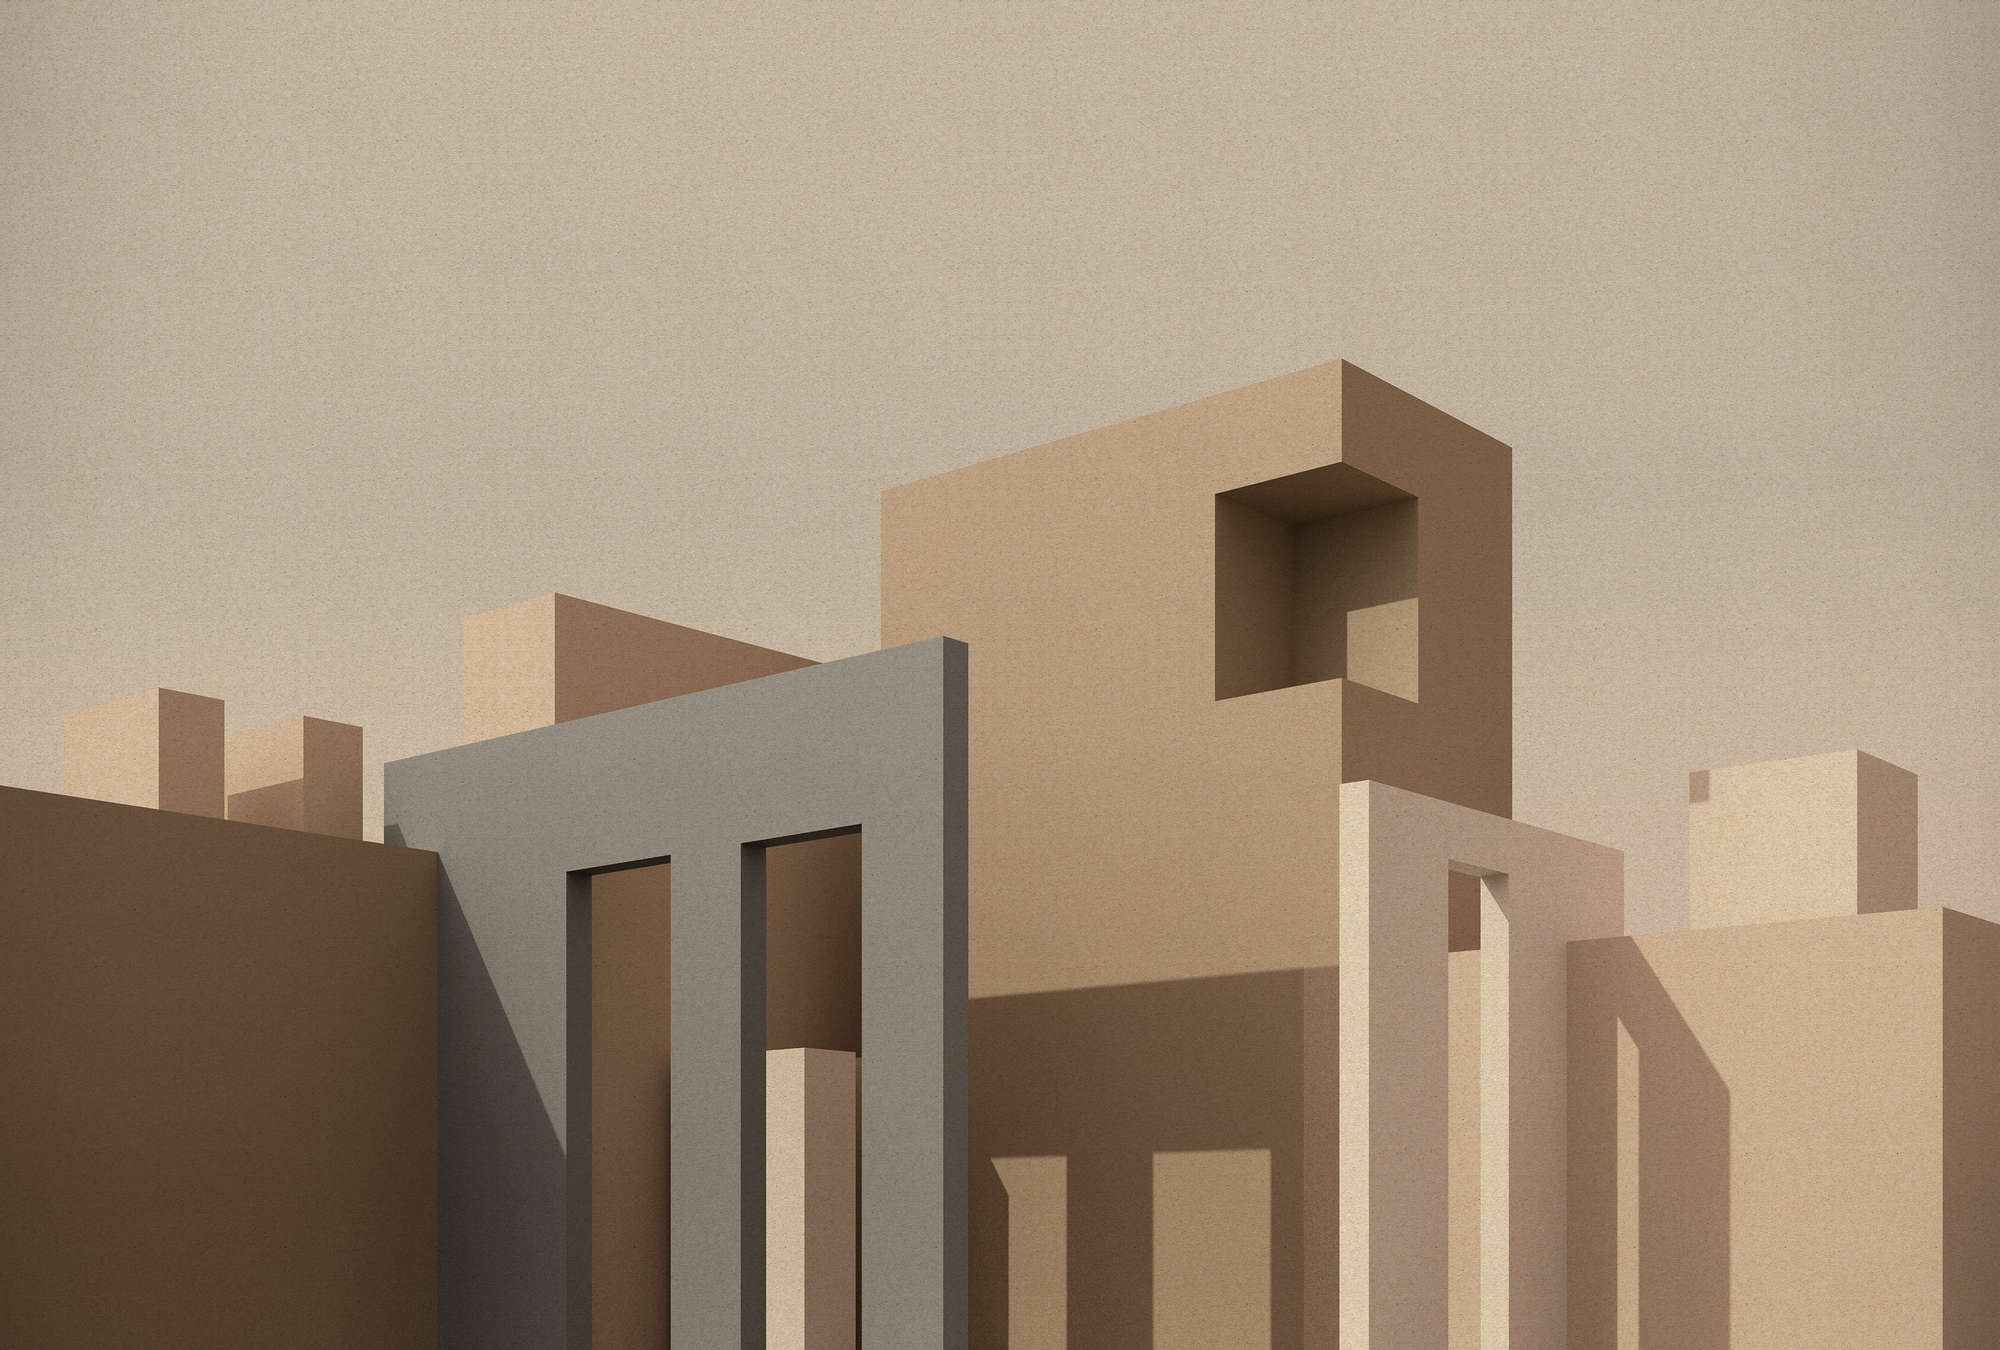             Tanger 1 – Fototapete Architektur Cube Design in Beige & Grau
        